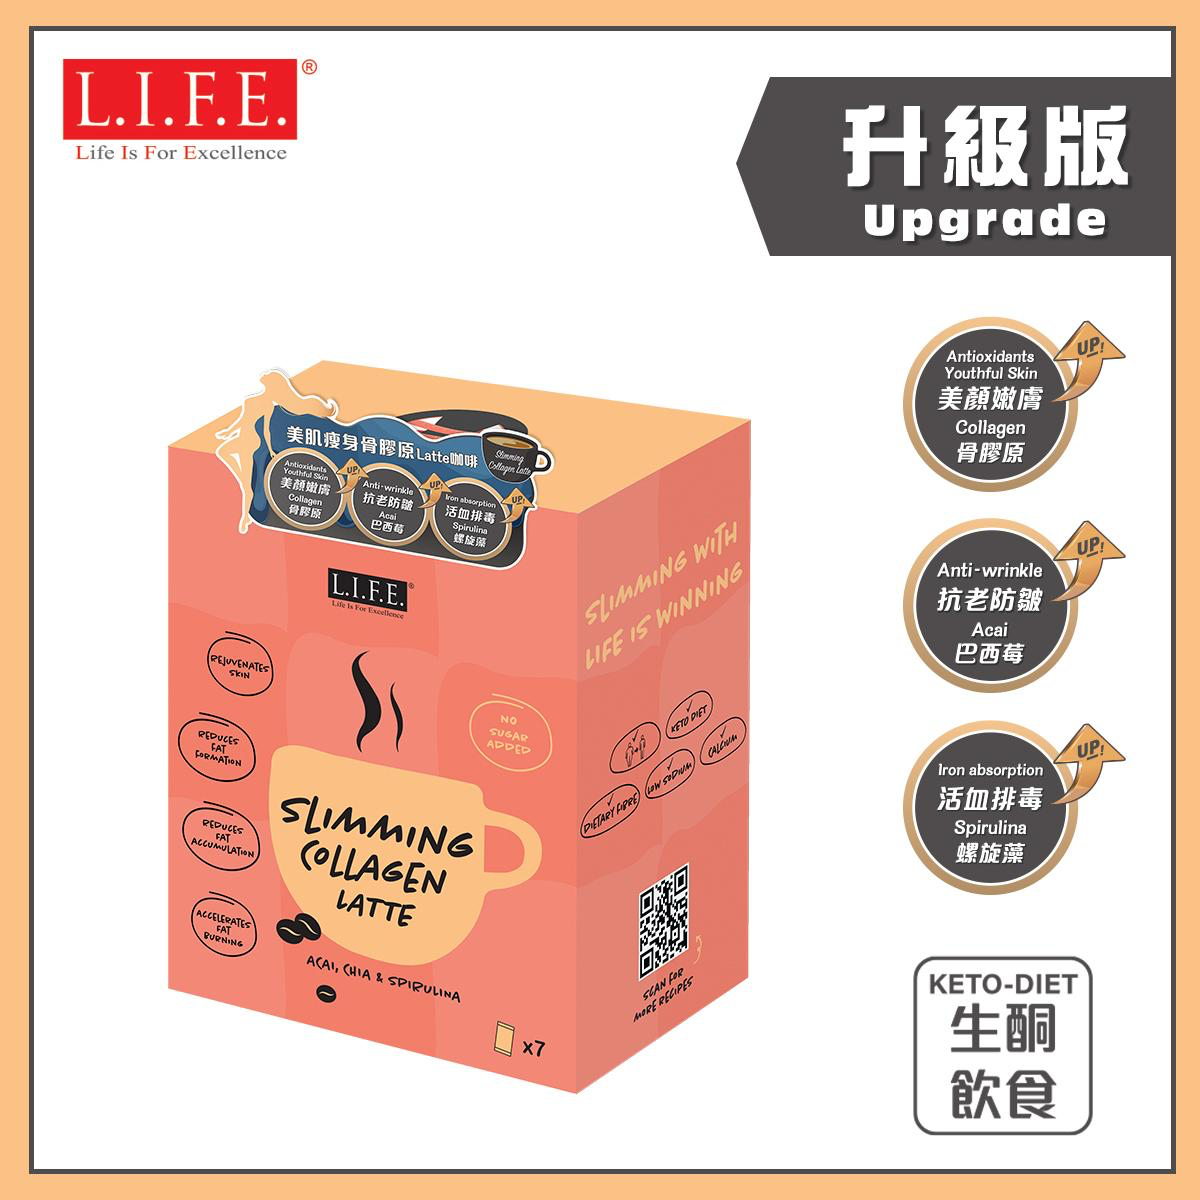 【Upgrade】Slimming Collagen Latte (Lightly Sweetened) 20g x7-pc #keto #detox #collagen